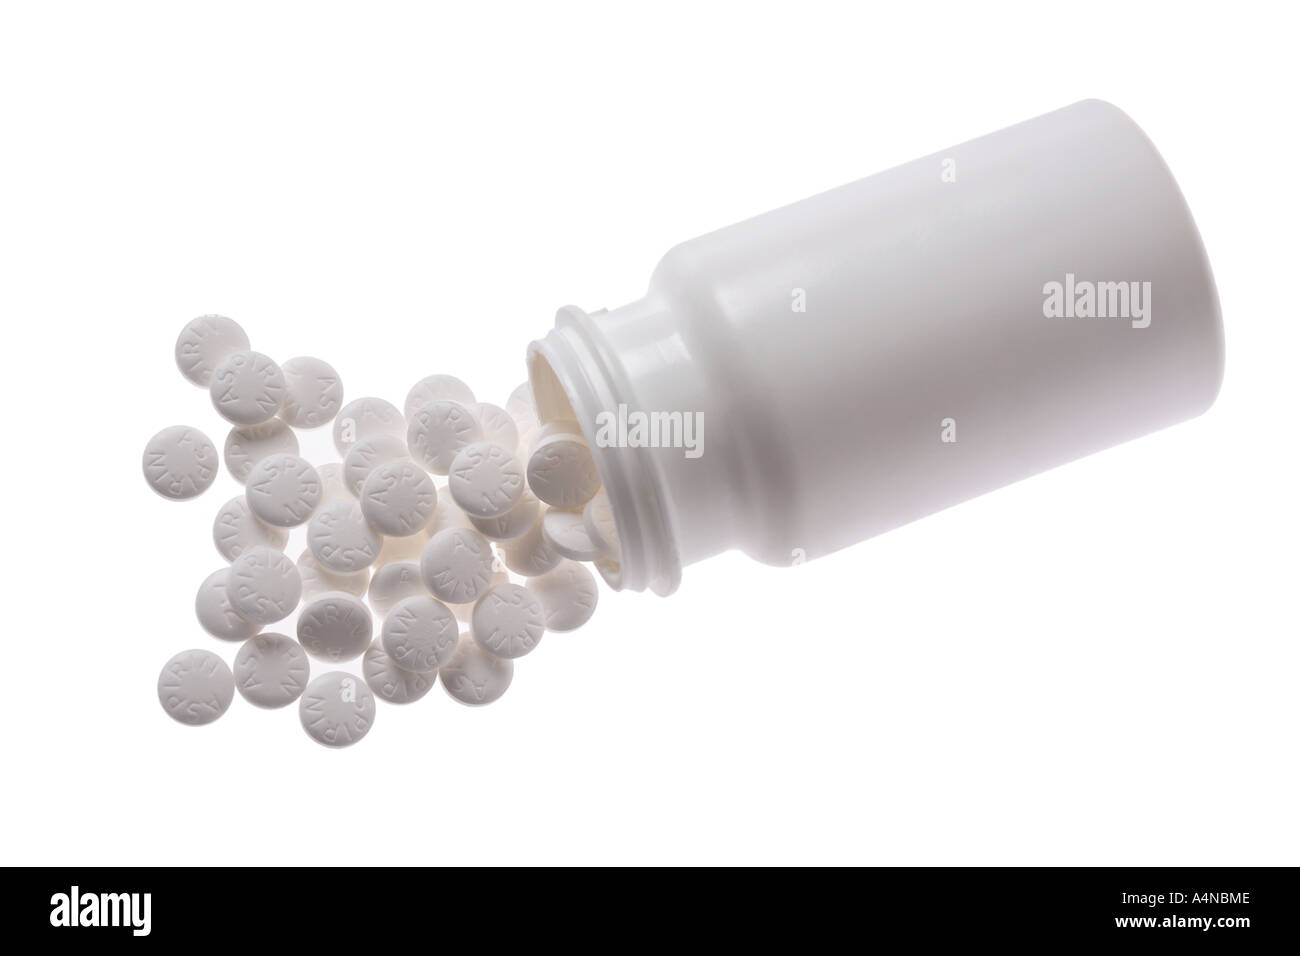 Aspirin-Flasche mit Aspirin verschütten Stockfoto